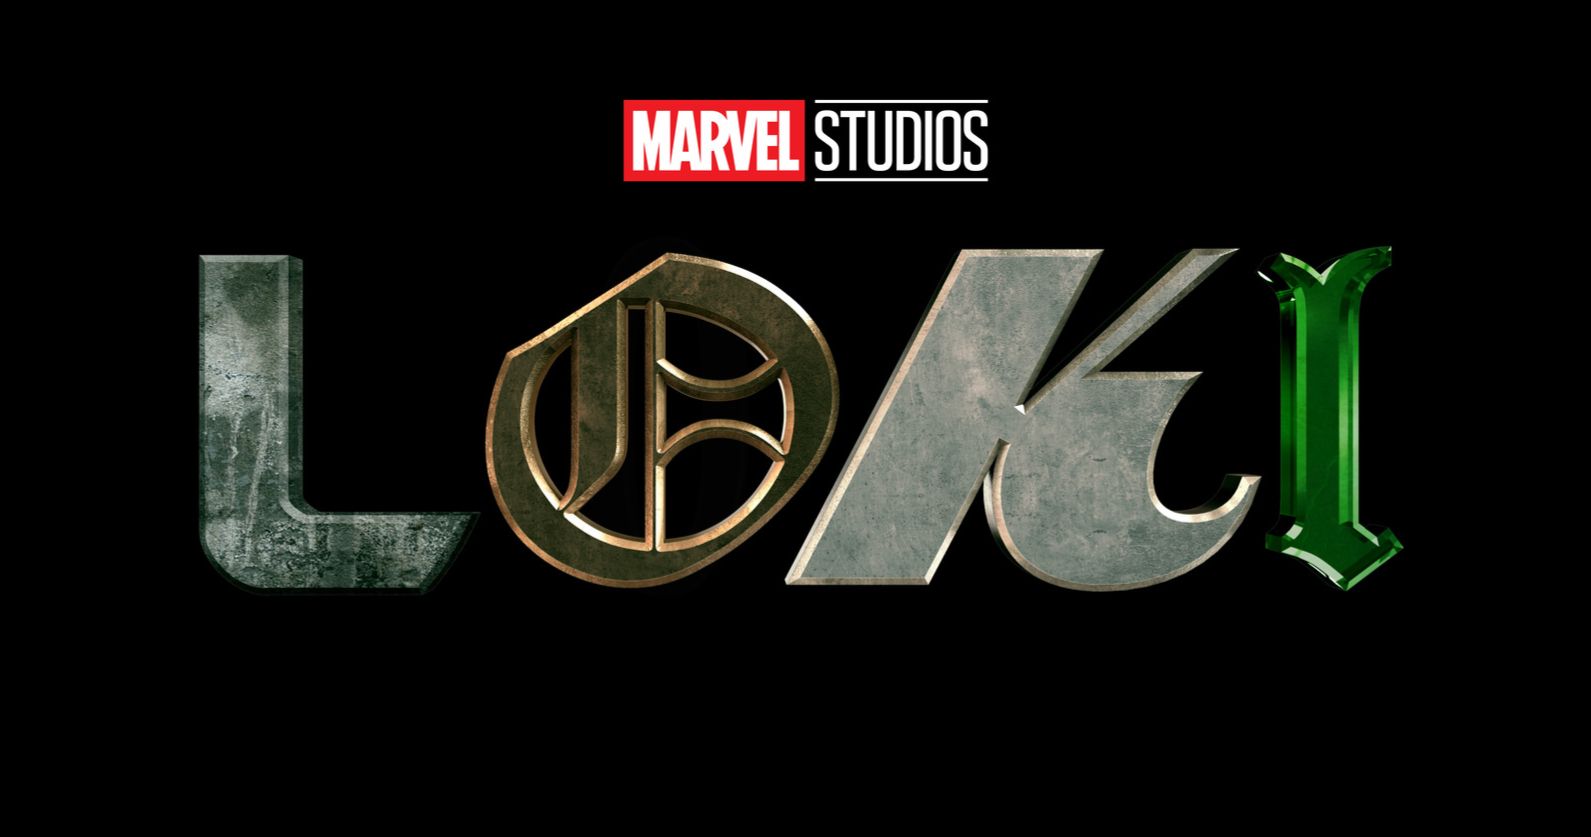 Loki Premieres Spring 2021: Based on Loki Who Escaped the Past in Avengers: Endgame